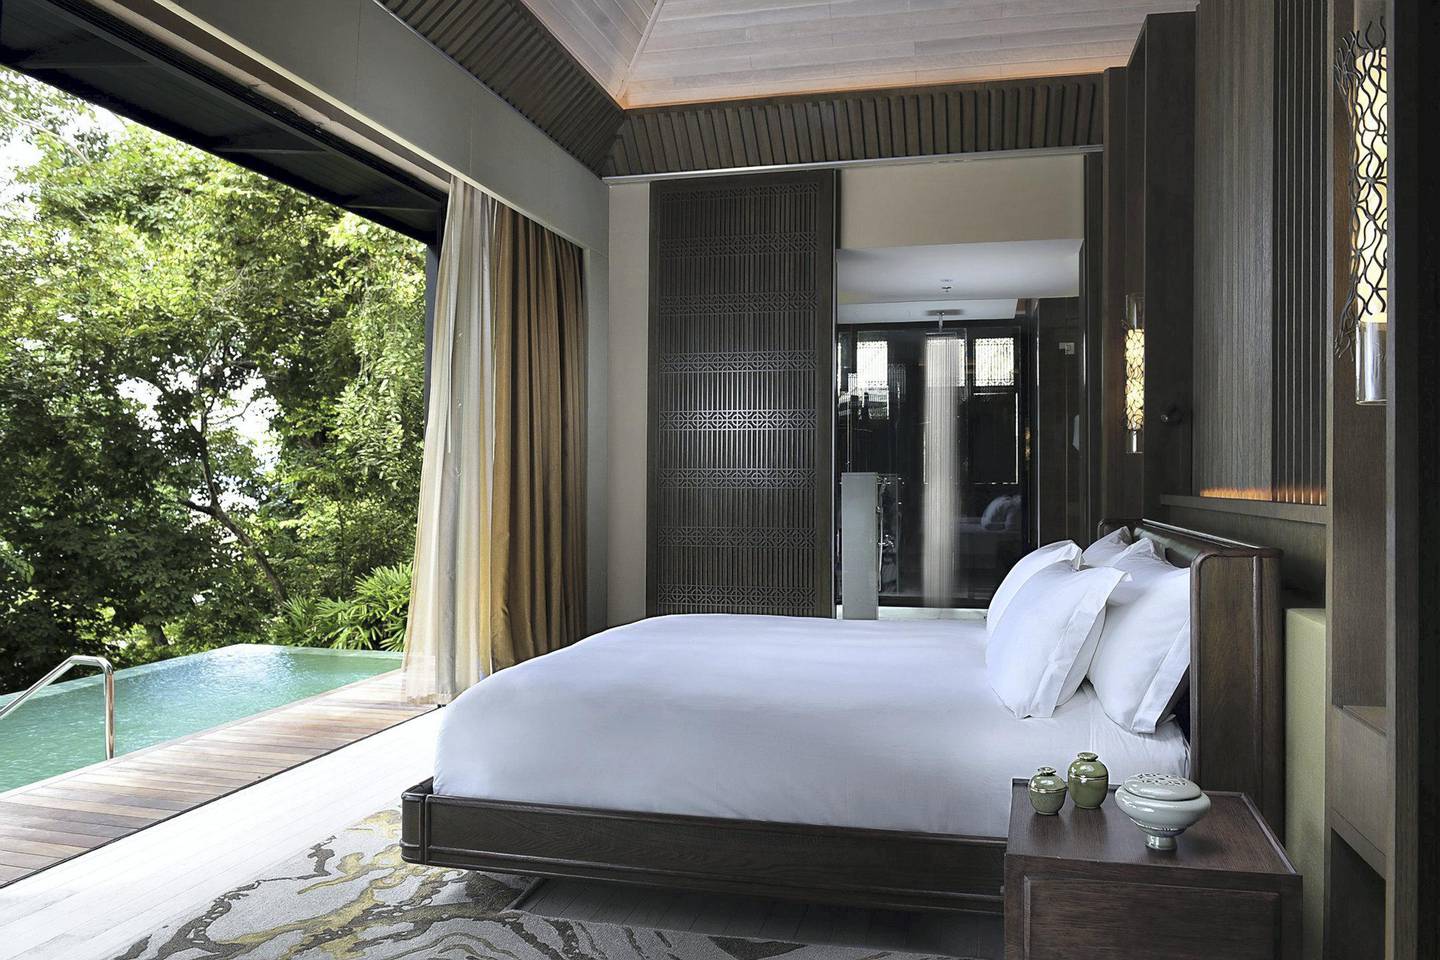 Rainforest Villa Bedroom at The Ritz-Carlton Langkawi. Courtesy The Ritz-Carlton, Langkawi